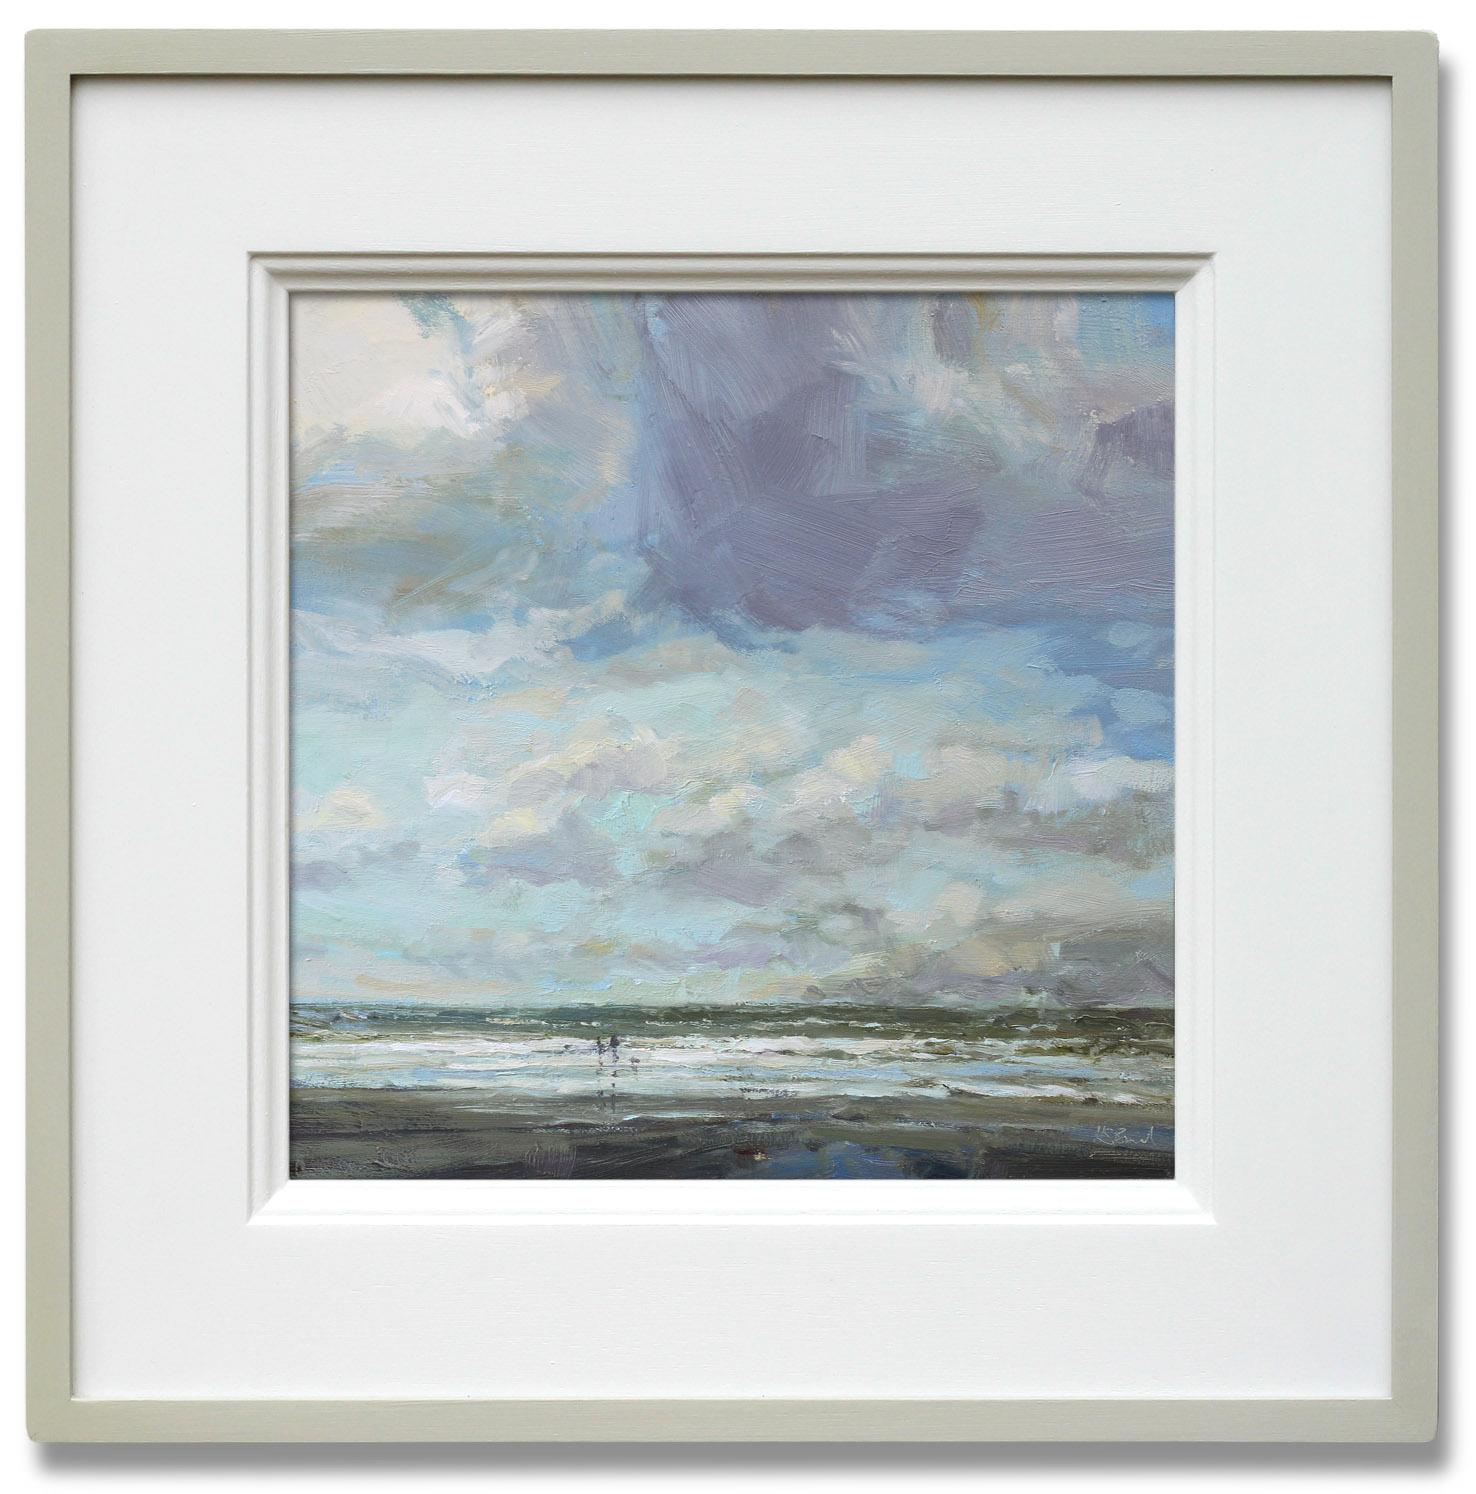 Harry Brioche Landscape Painting - Morning Breeze - original seascape ocean natural tones oil painting contemporary